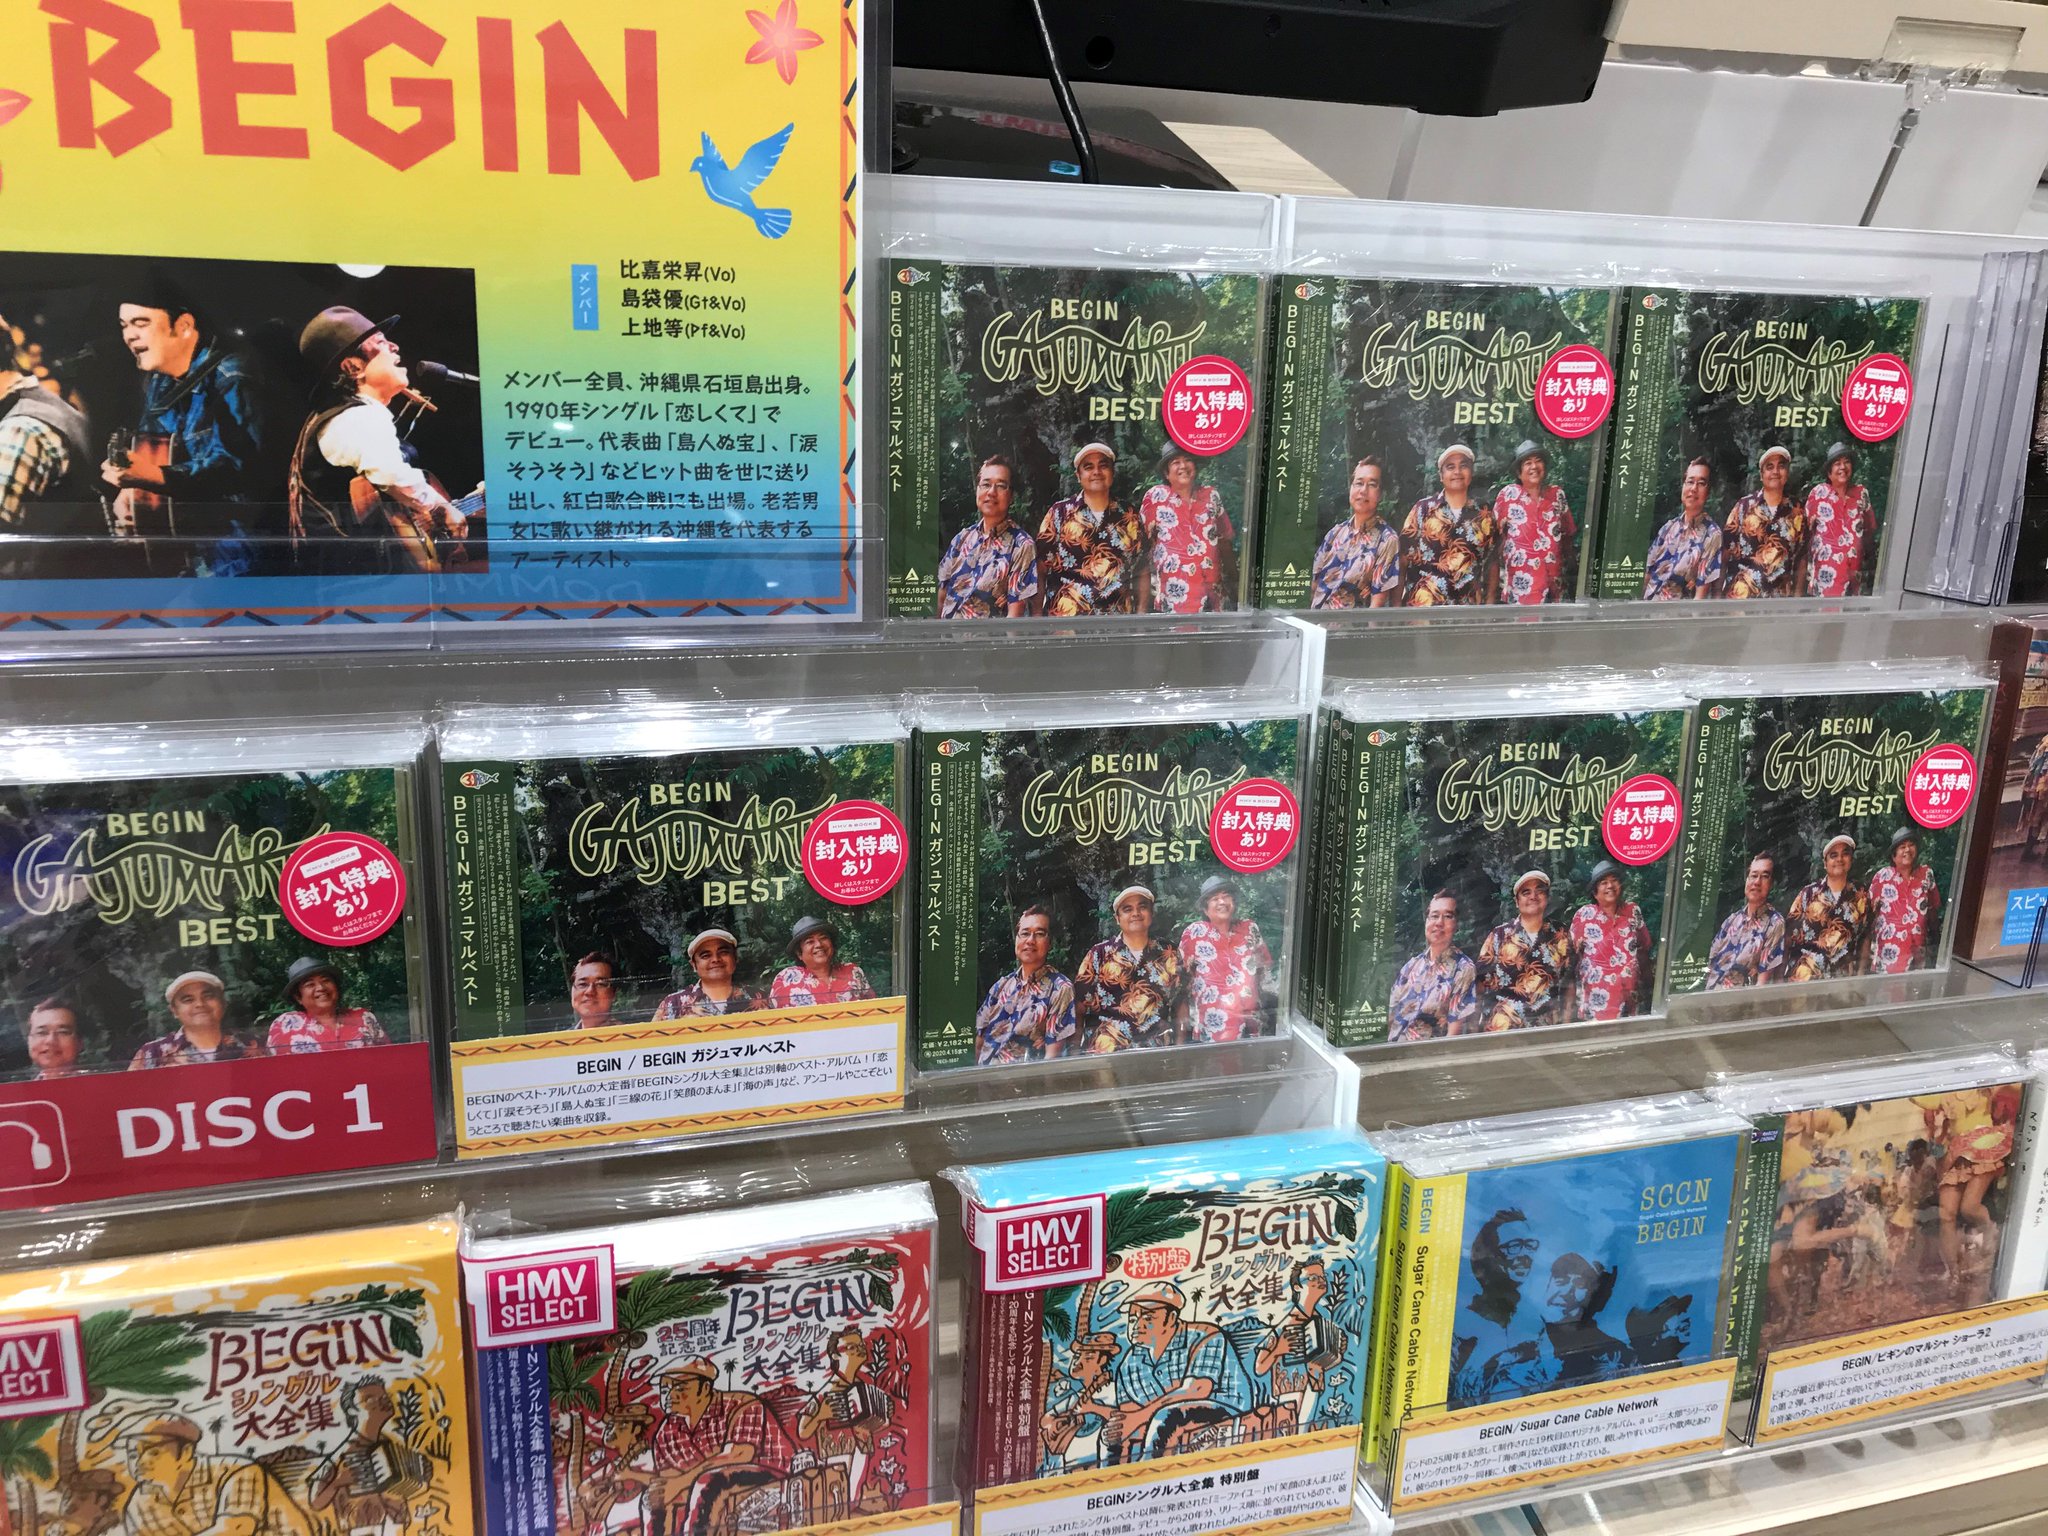 Hmv Books Okinawa Begin 30周年を目前に控えたbeginの最新ベスト アルバム Begin の人気定番曲を厳選した シングル大全集 とは別軸のベスト アルバム 恋しくて 涙そうそう 島人ぬ宝 三線の花 笑顔のまんま 海の声 などが収録